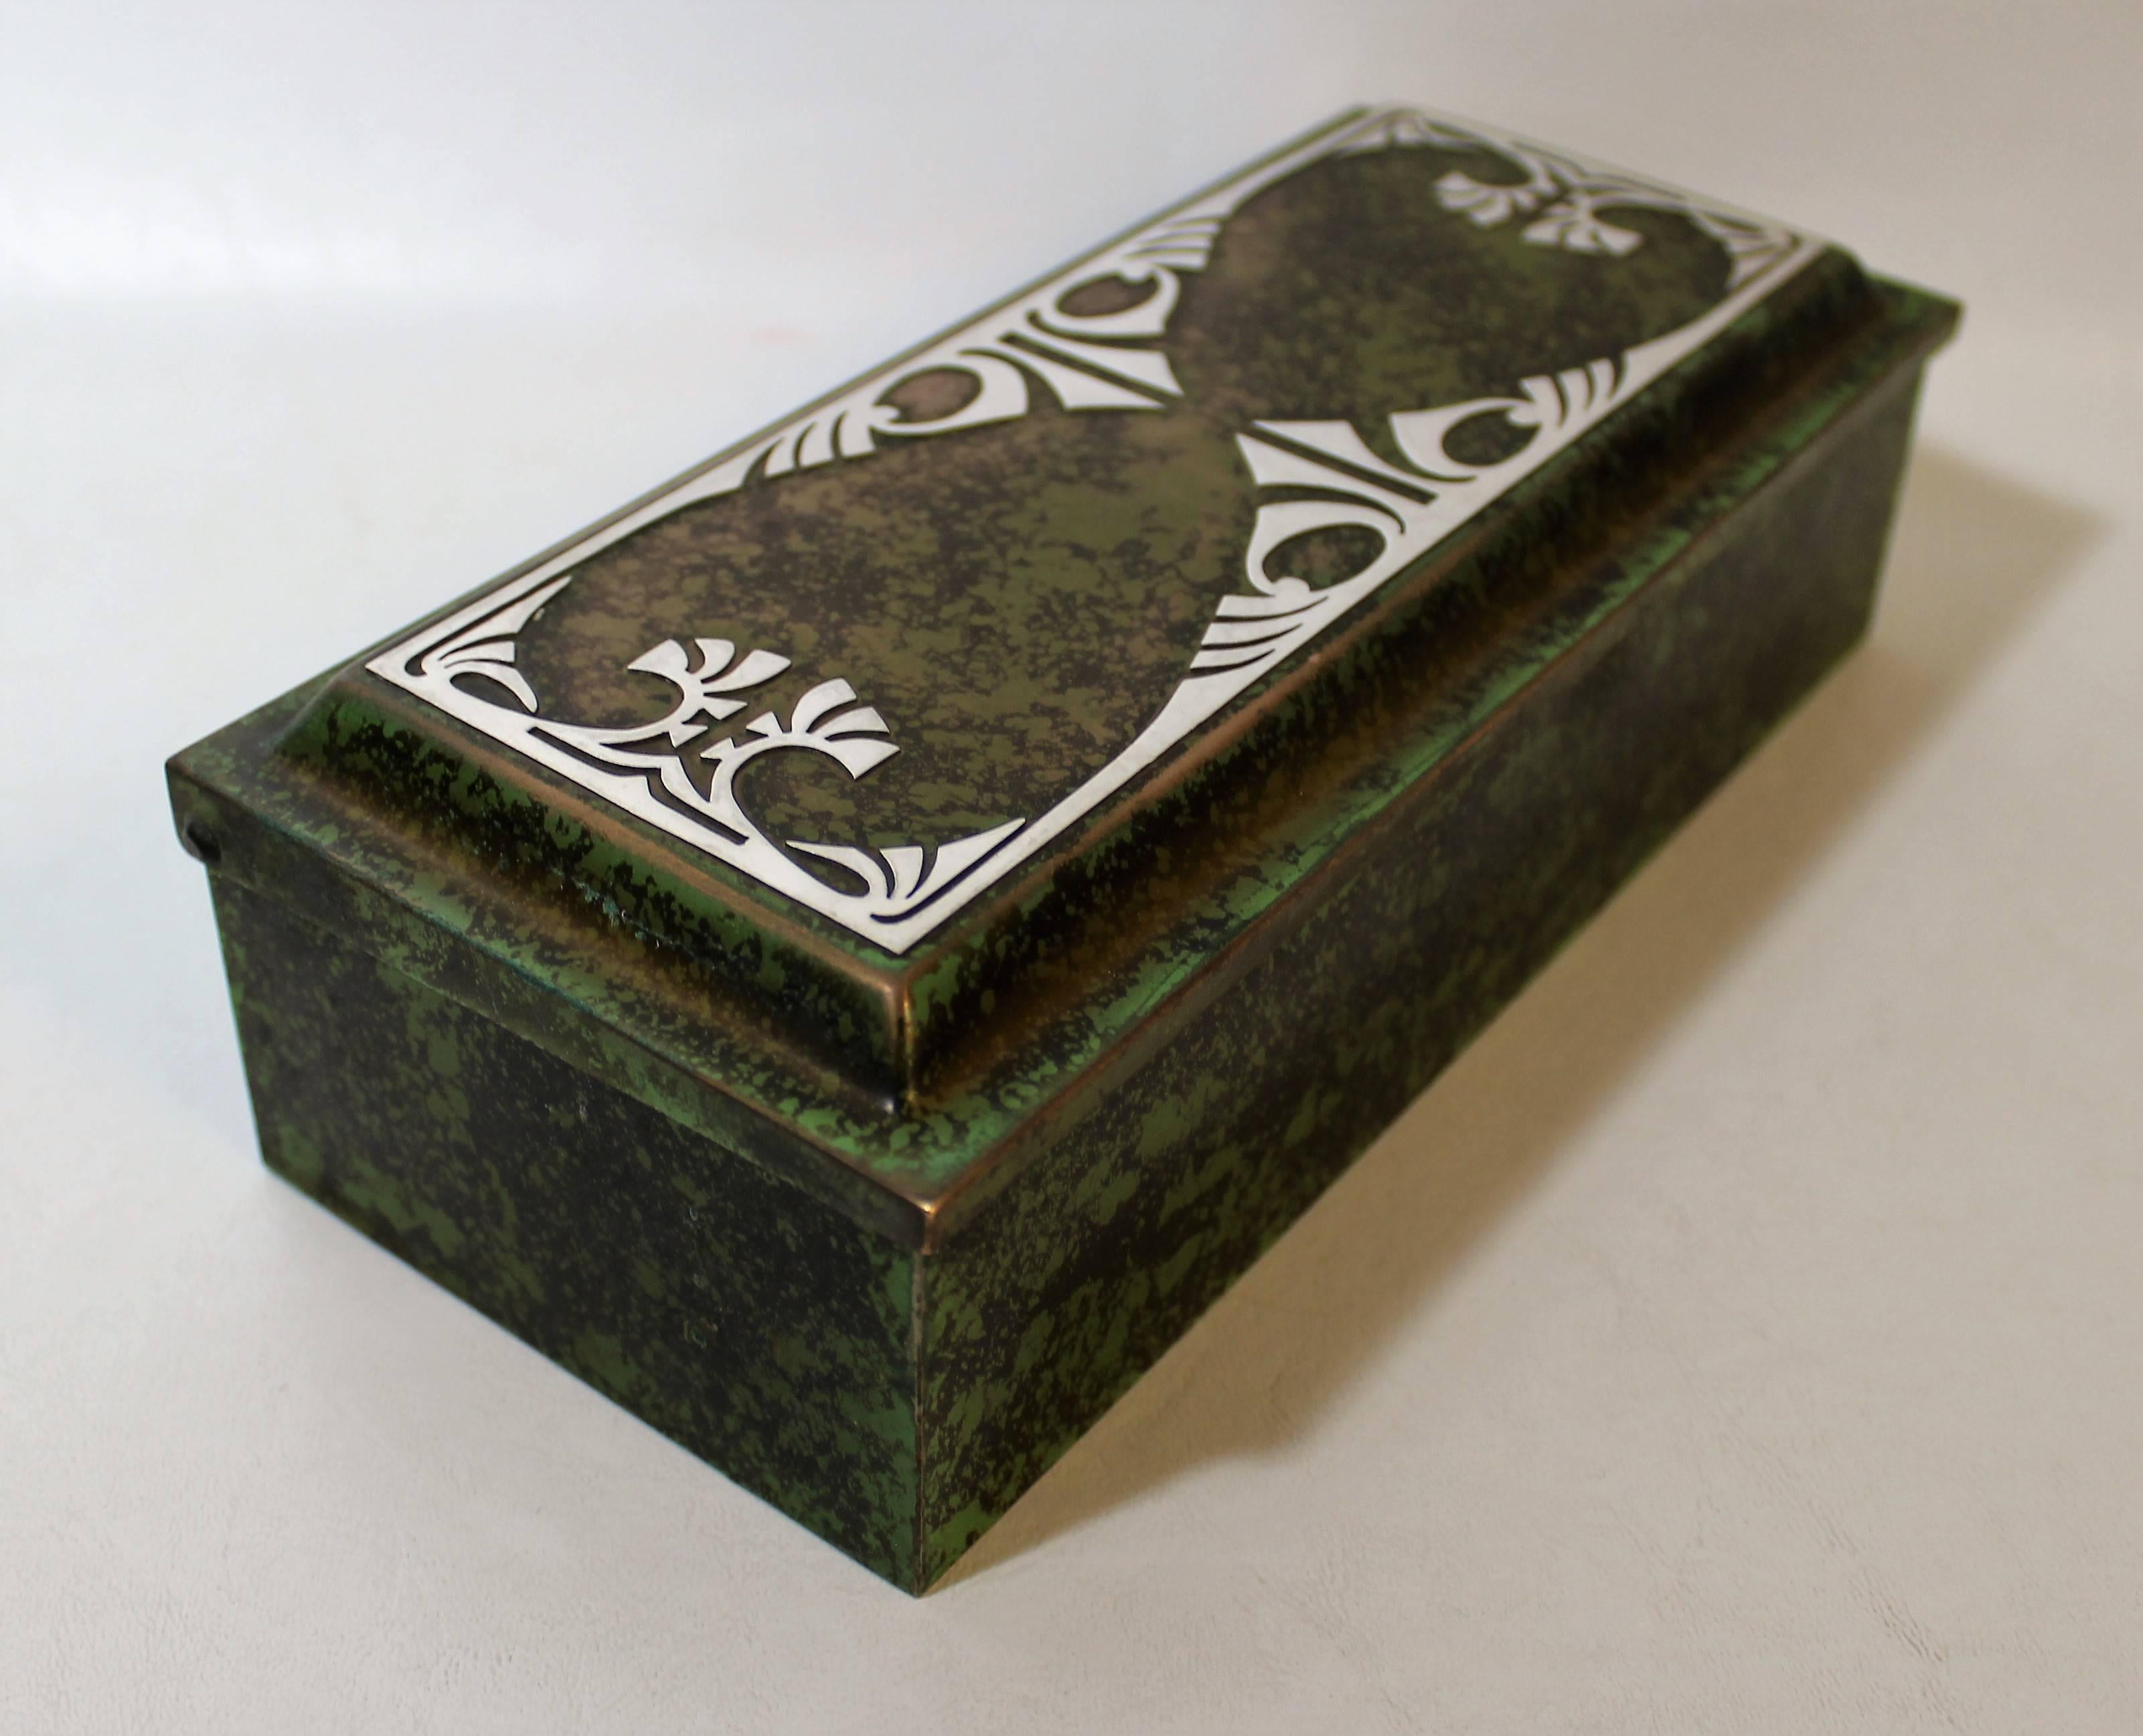 Heintz Art Metal Shop sterling silver on bronze box with applied frog skin design.